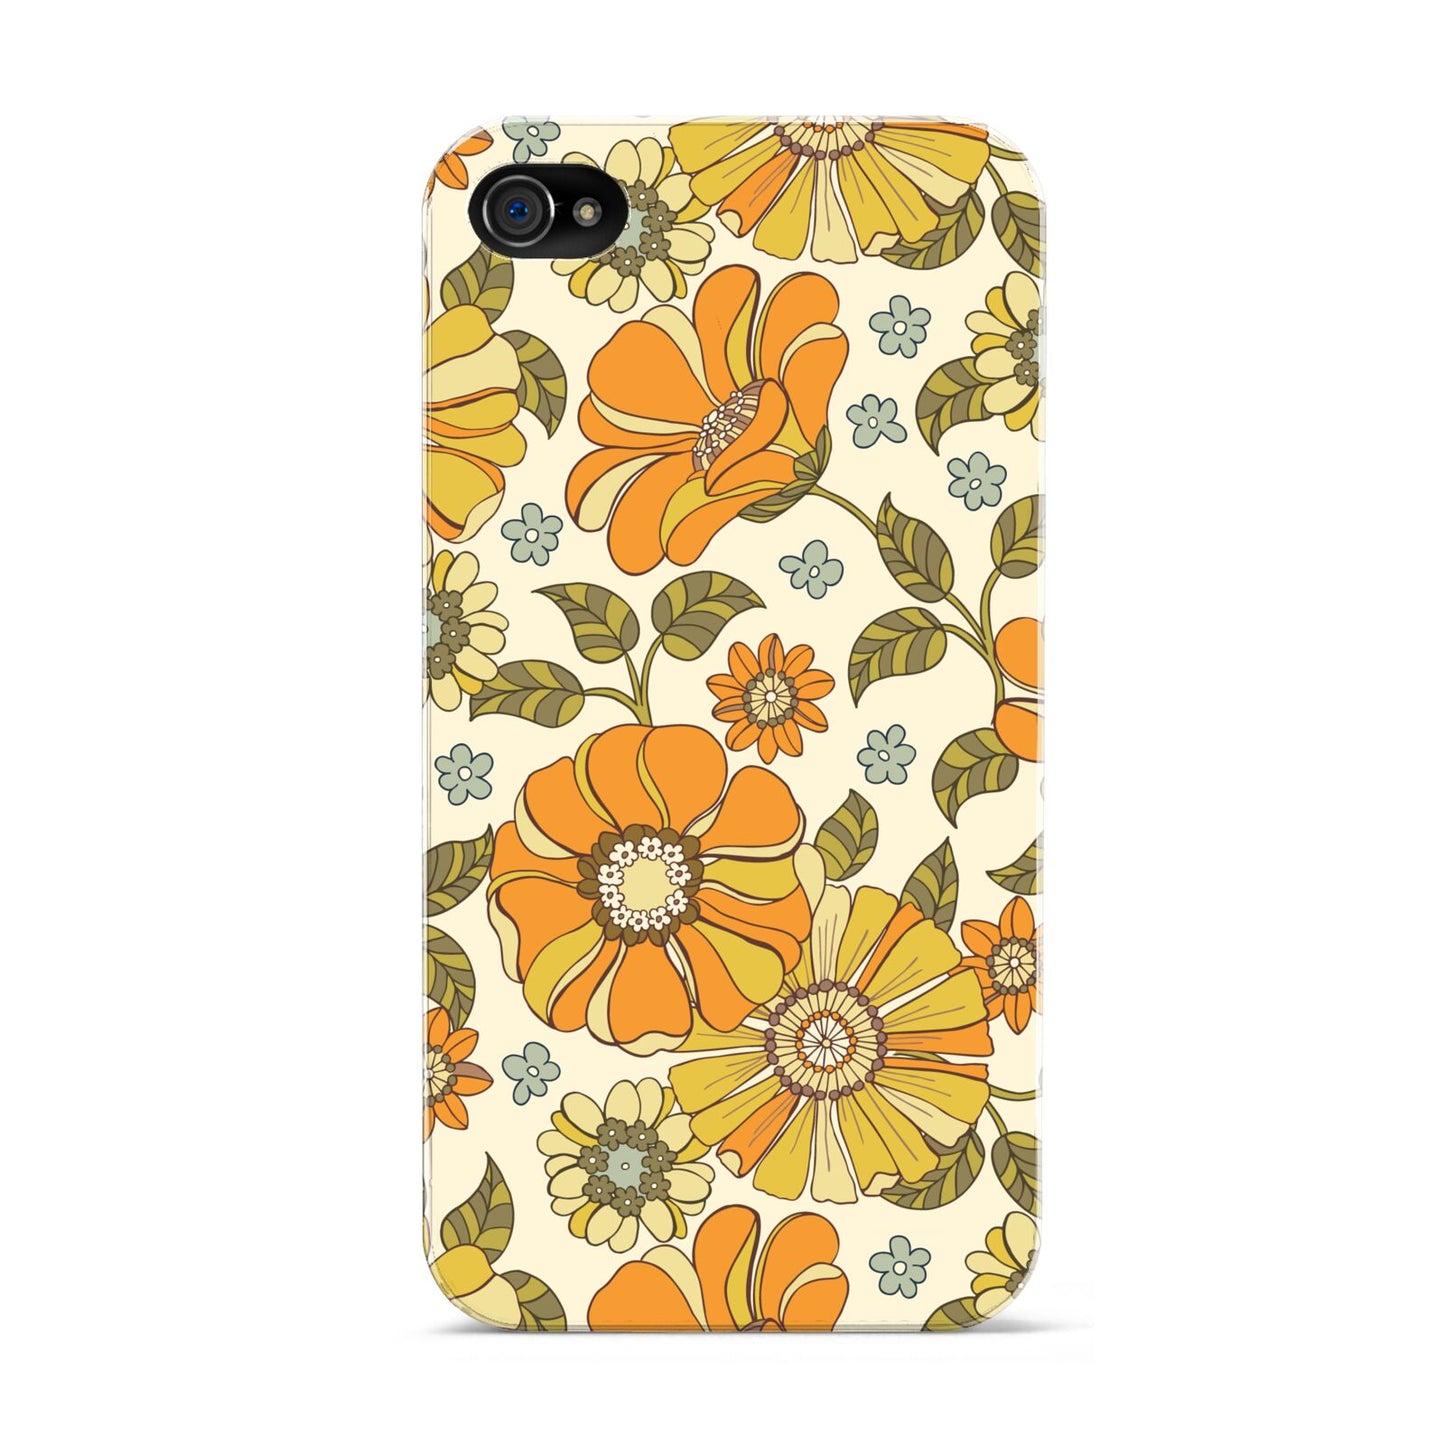 Vintage Floral Apple iPhone 4s Case